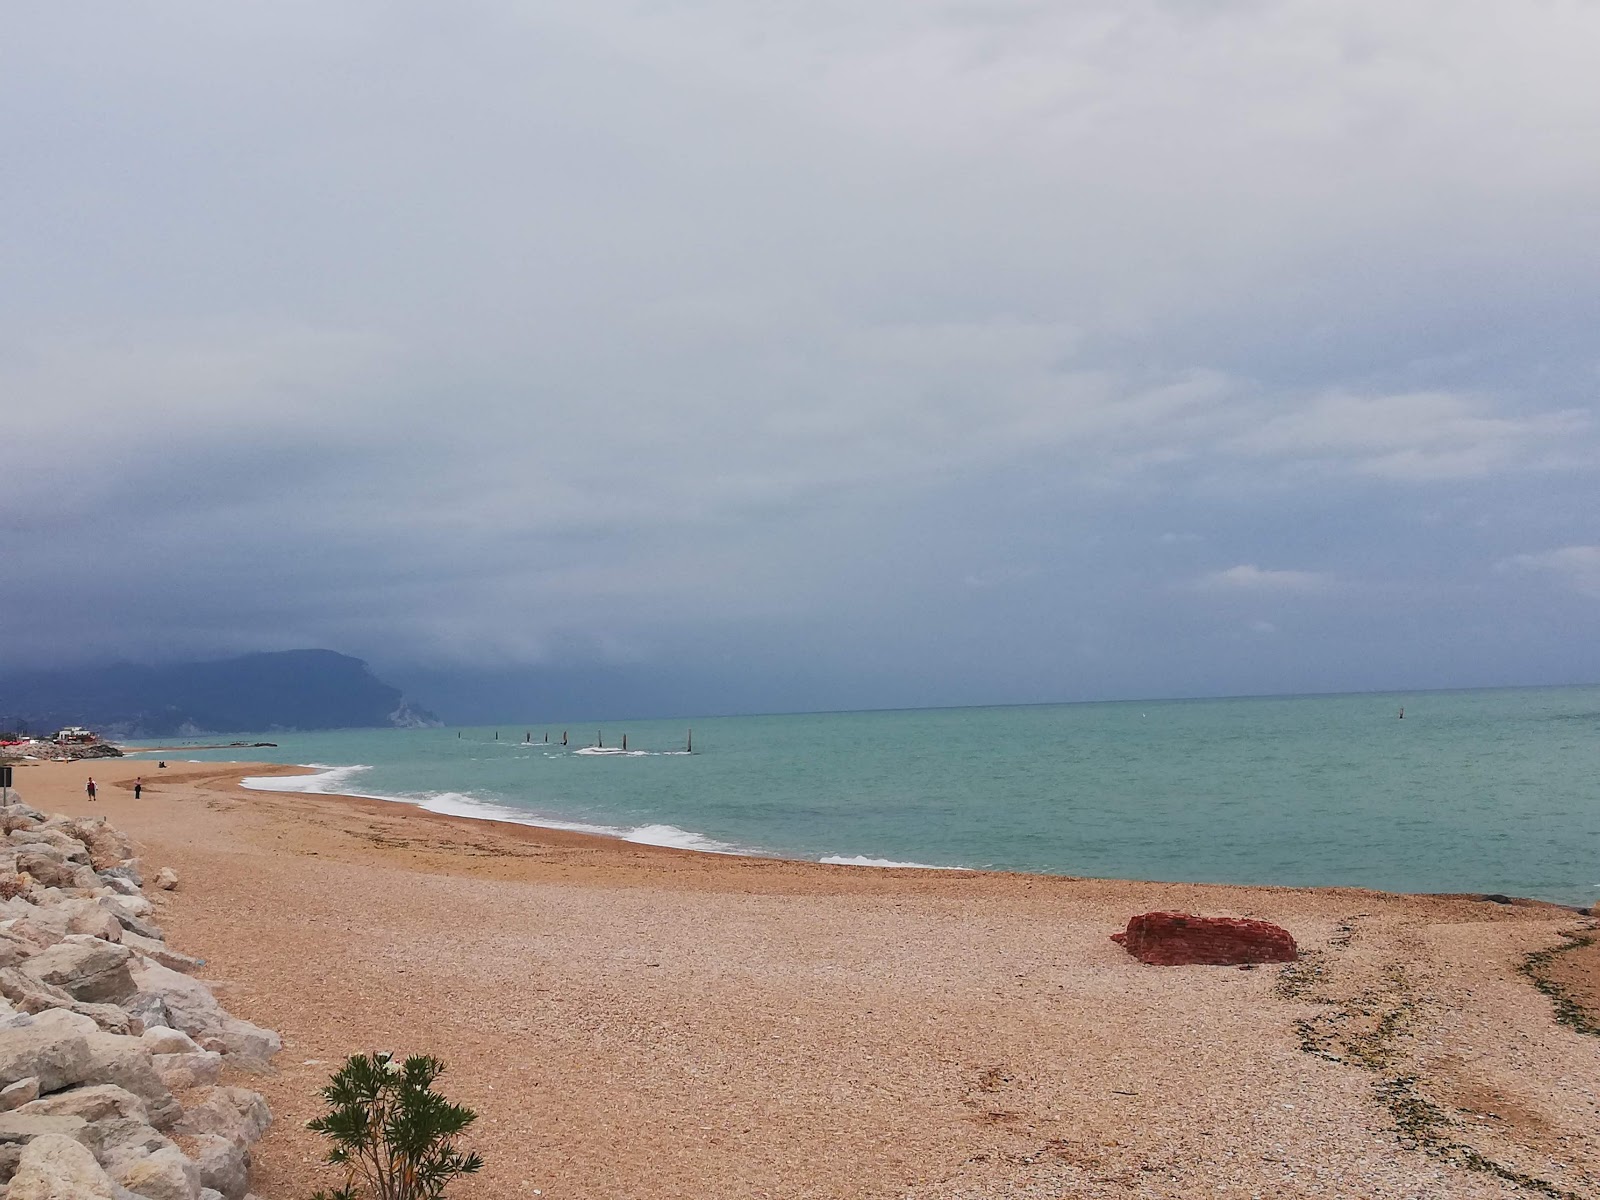 Foto de Spiaggia della Montecatini con playa amplia